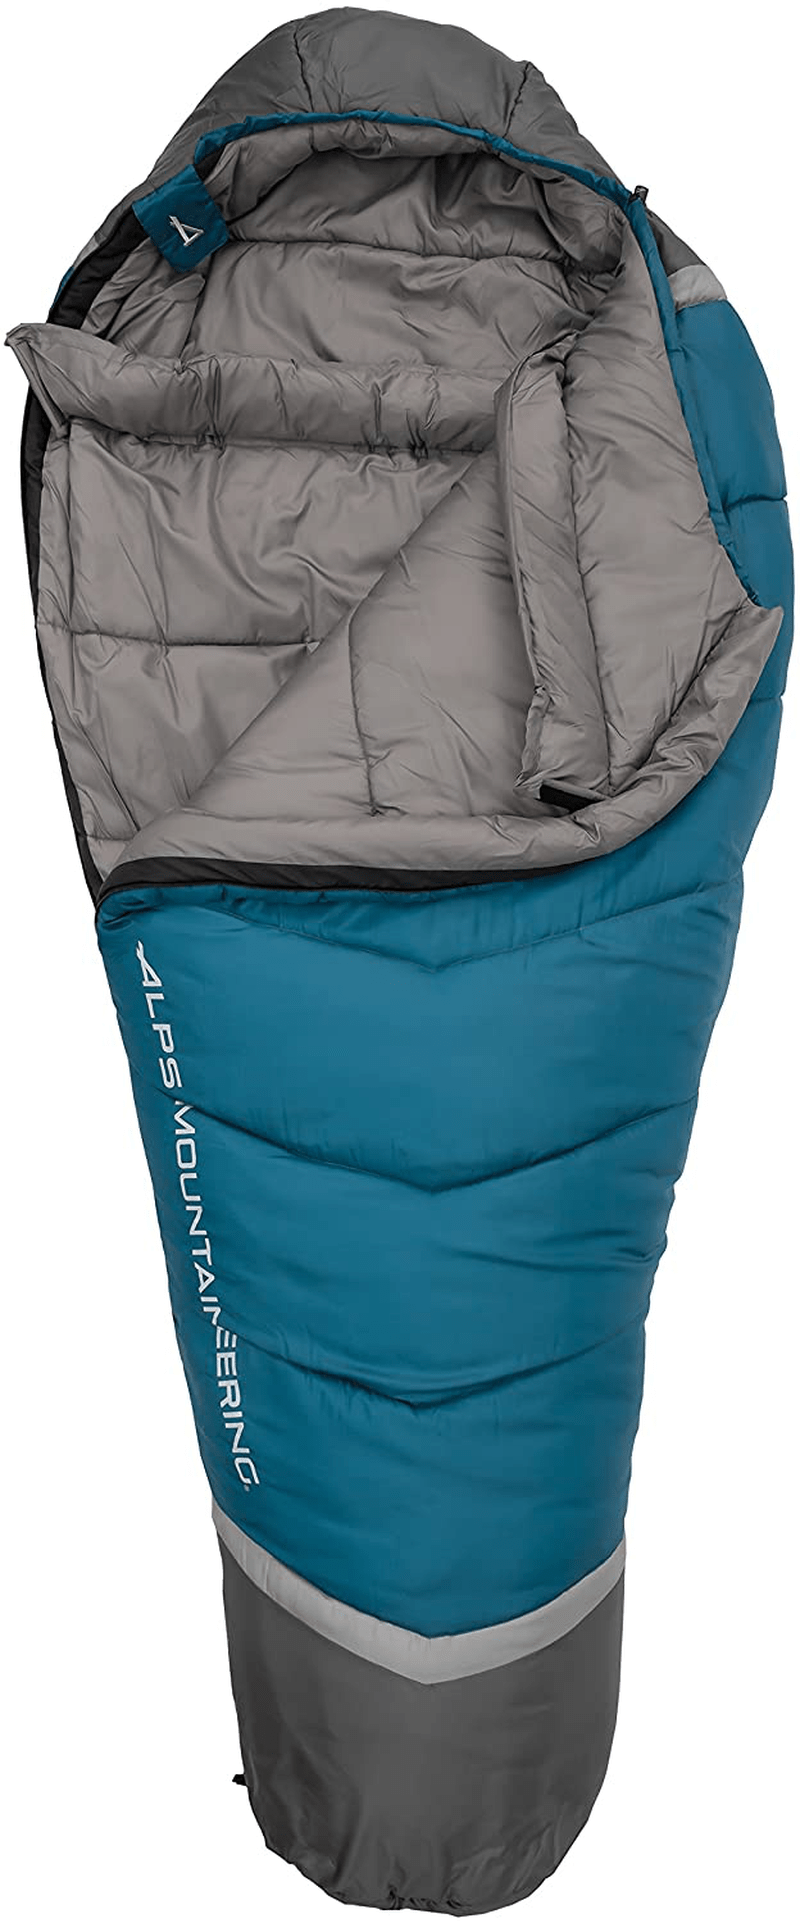 ALPS Mountaineering Blaze -20 Degree Mummy Sleeping Bag Sporting Goods > Outdoor Recreation > Camping & Hiking > Sleeping Bags ALPS Mountaineering   